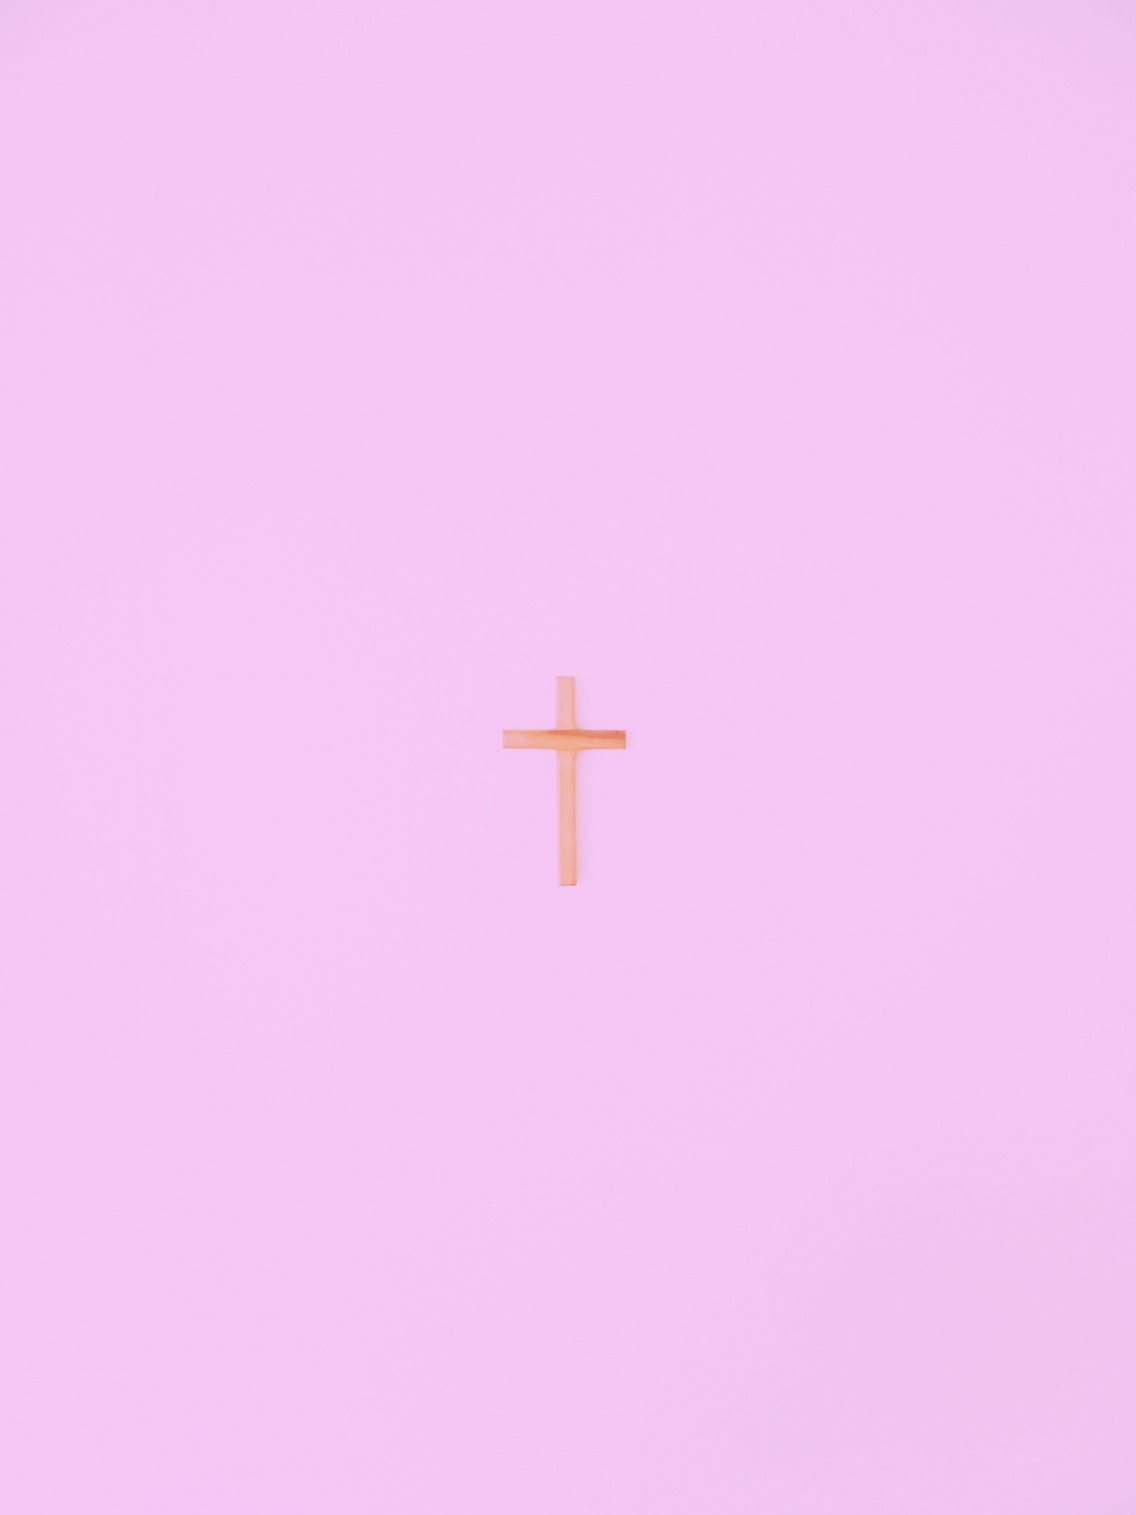 Alone Cross Pink Aesthetic Space Simple Minimal